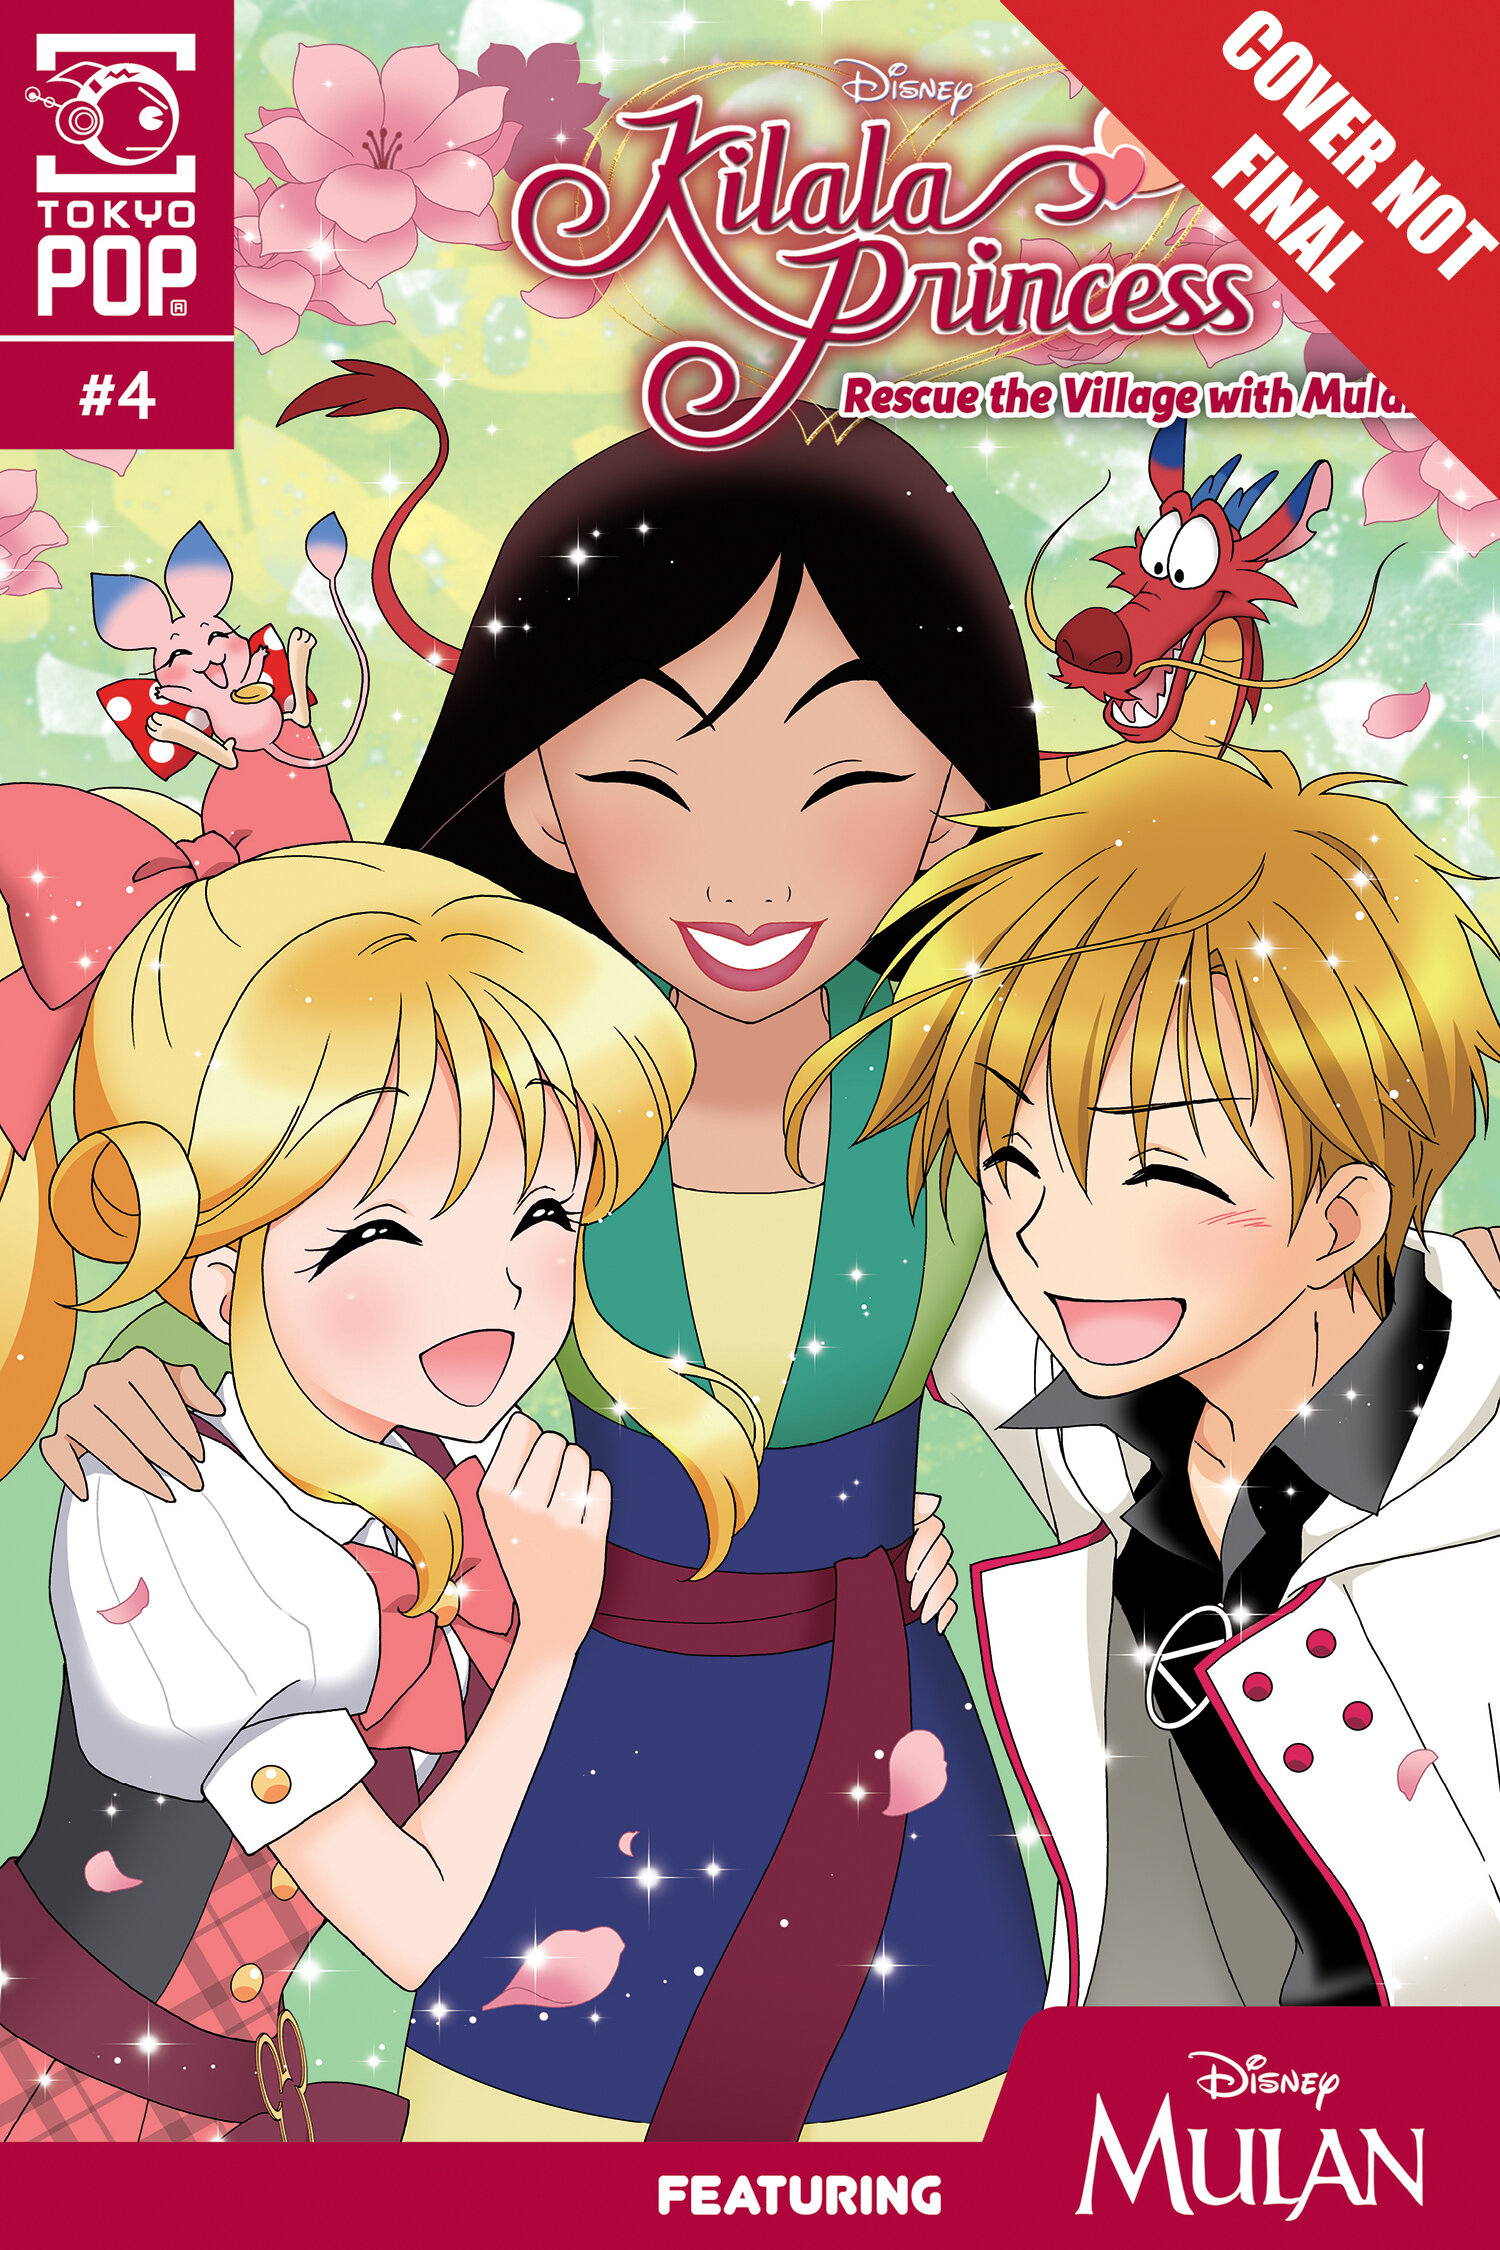 Disney Manga: Kilala Princess - Save the Village with Mulan!, Issue #4